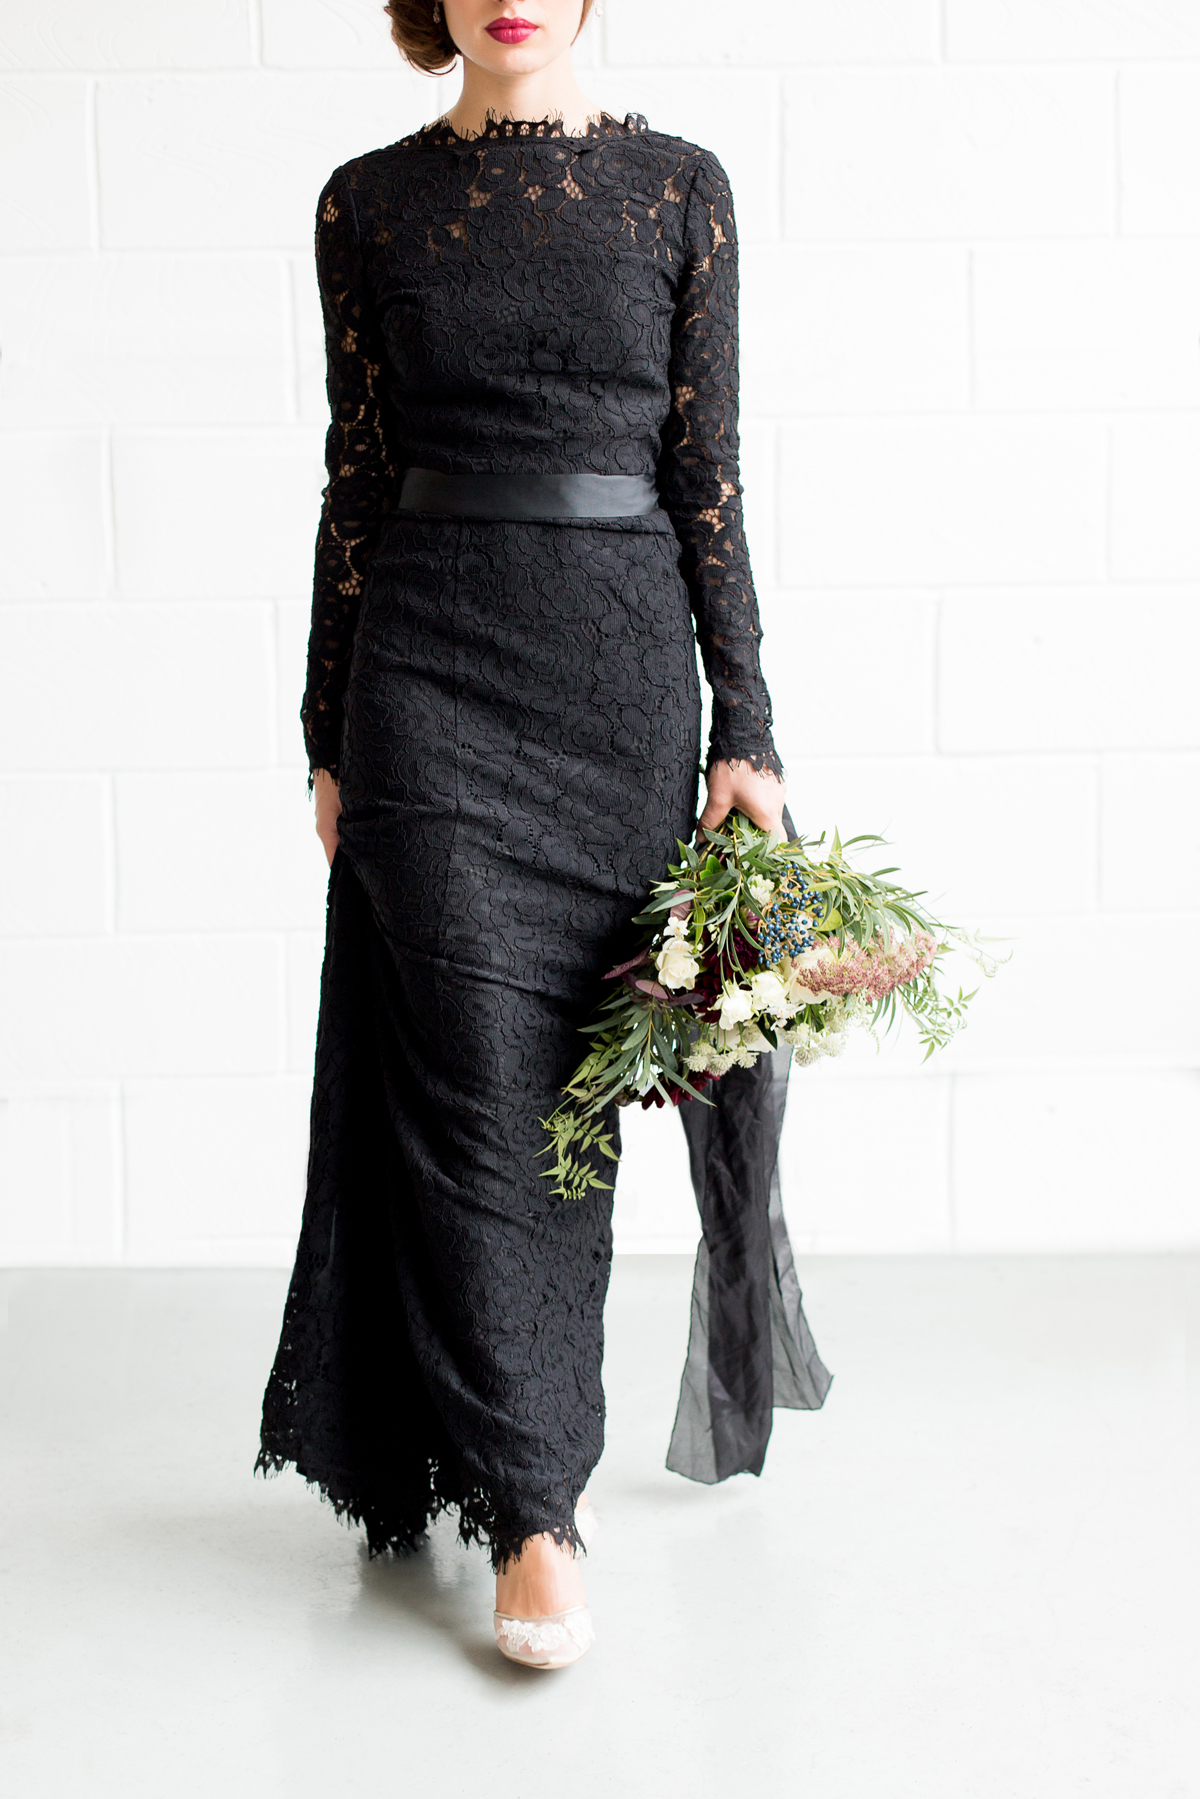 Black Lace Bridesmaid Dress